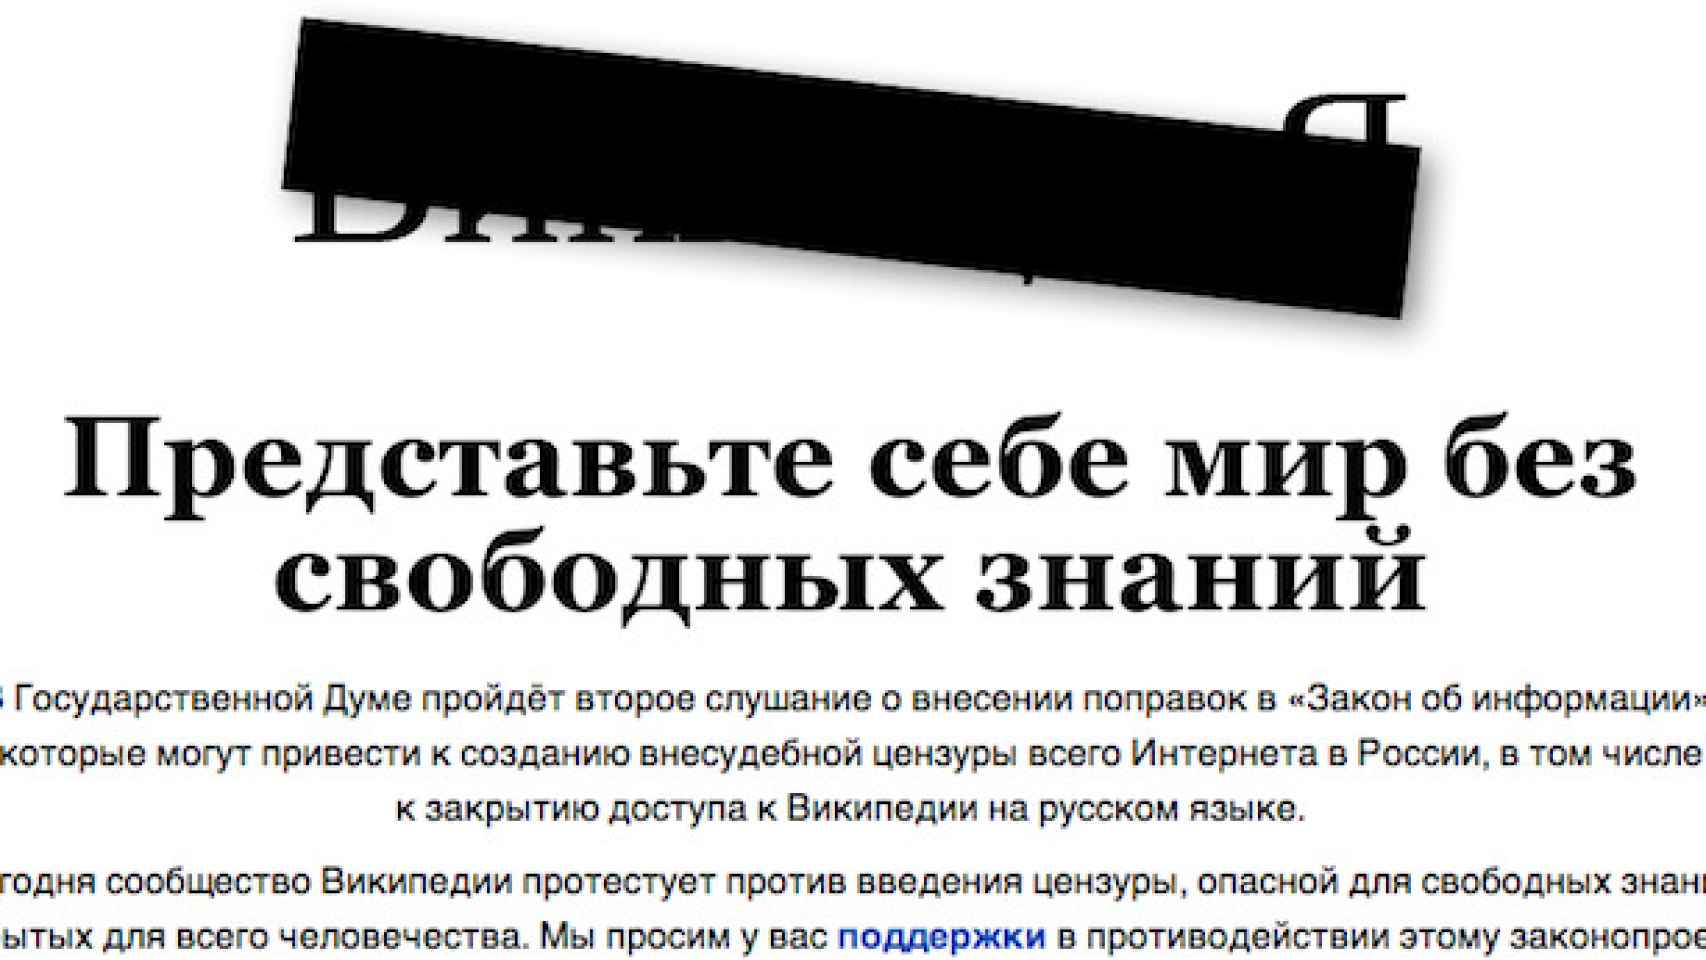 wikipedia-rusa-bloqueada